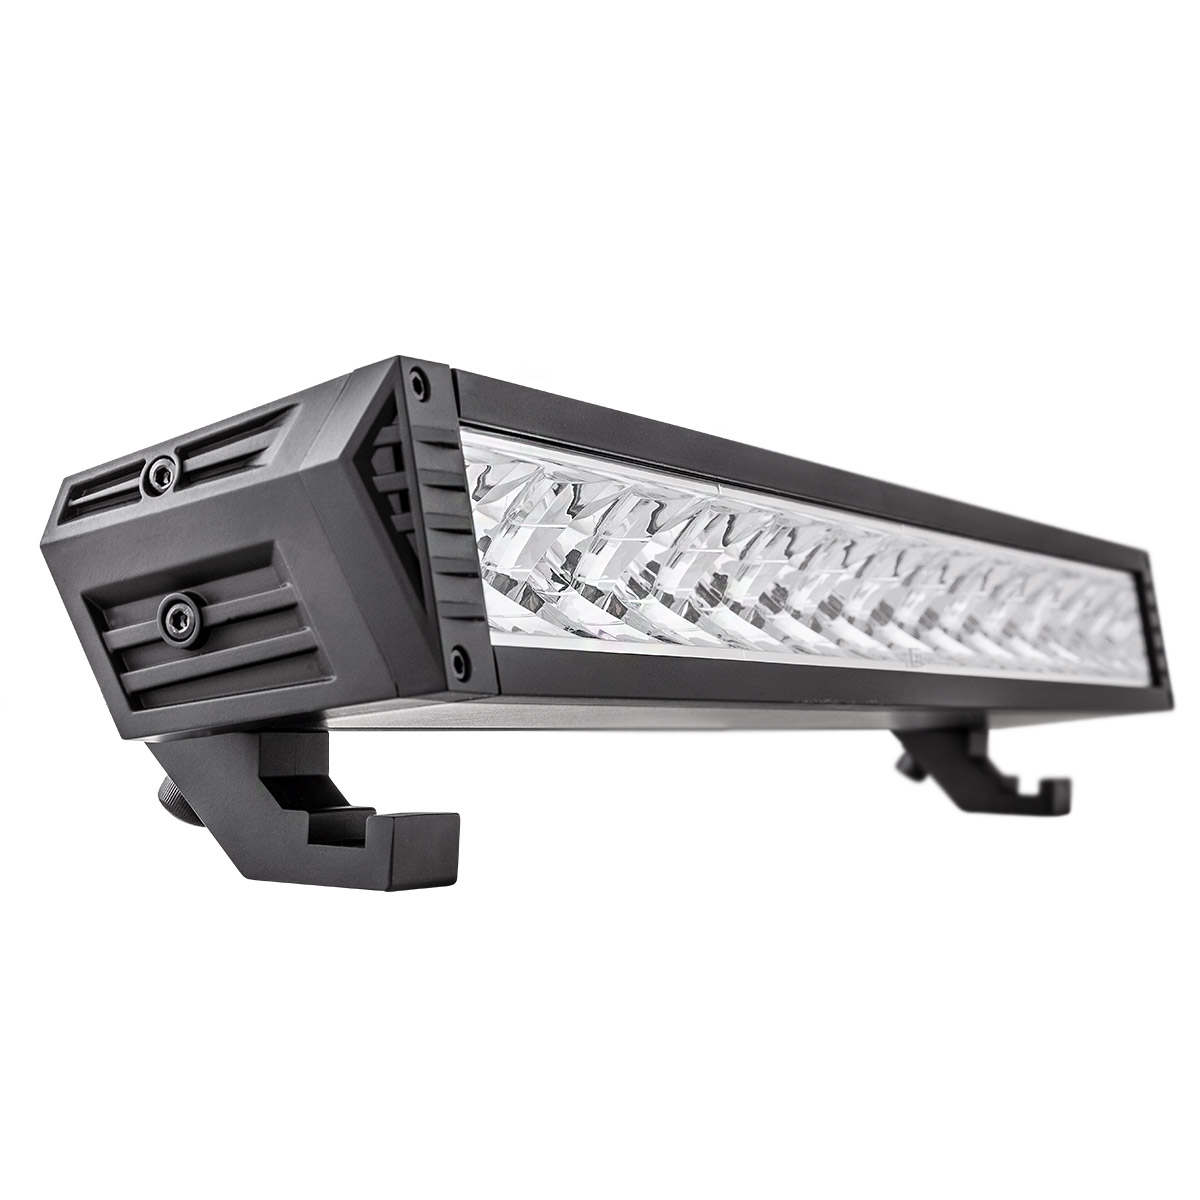 LED barra de luz 20" Prime X      76,4W      con certificado TÜV